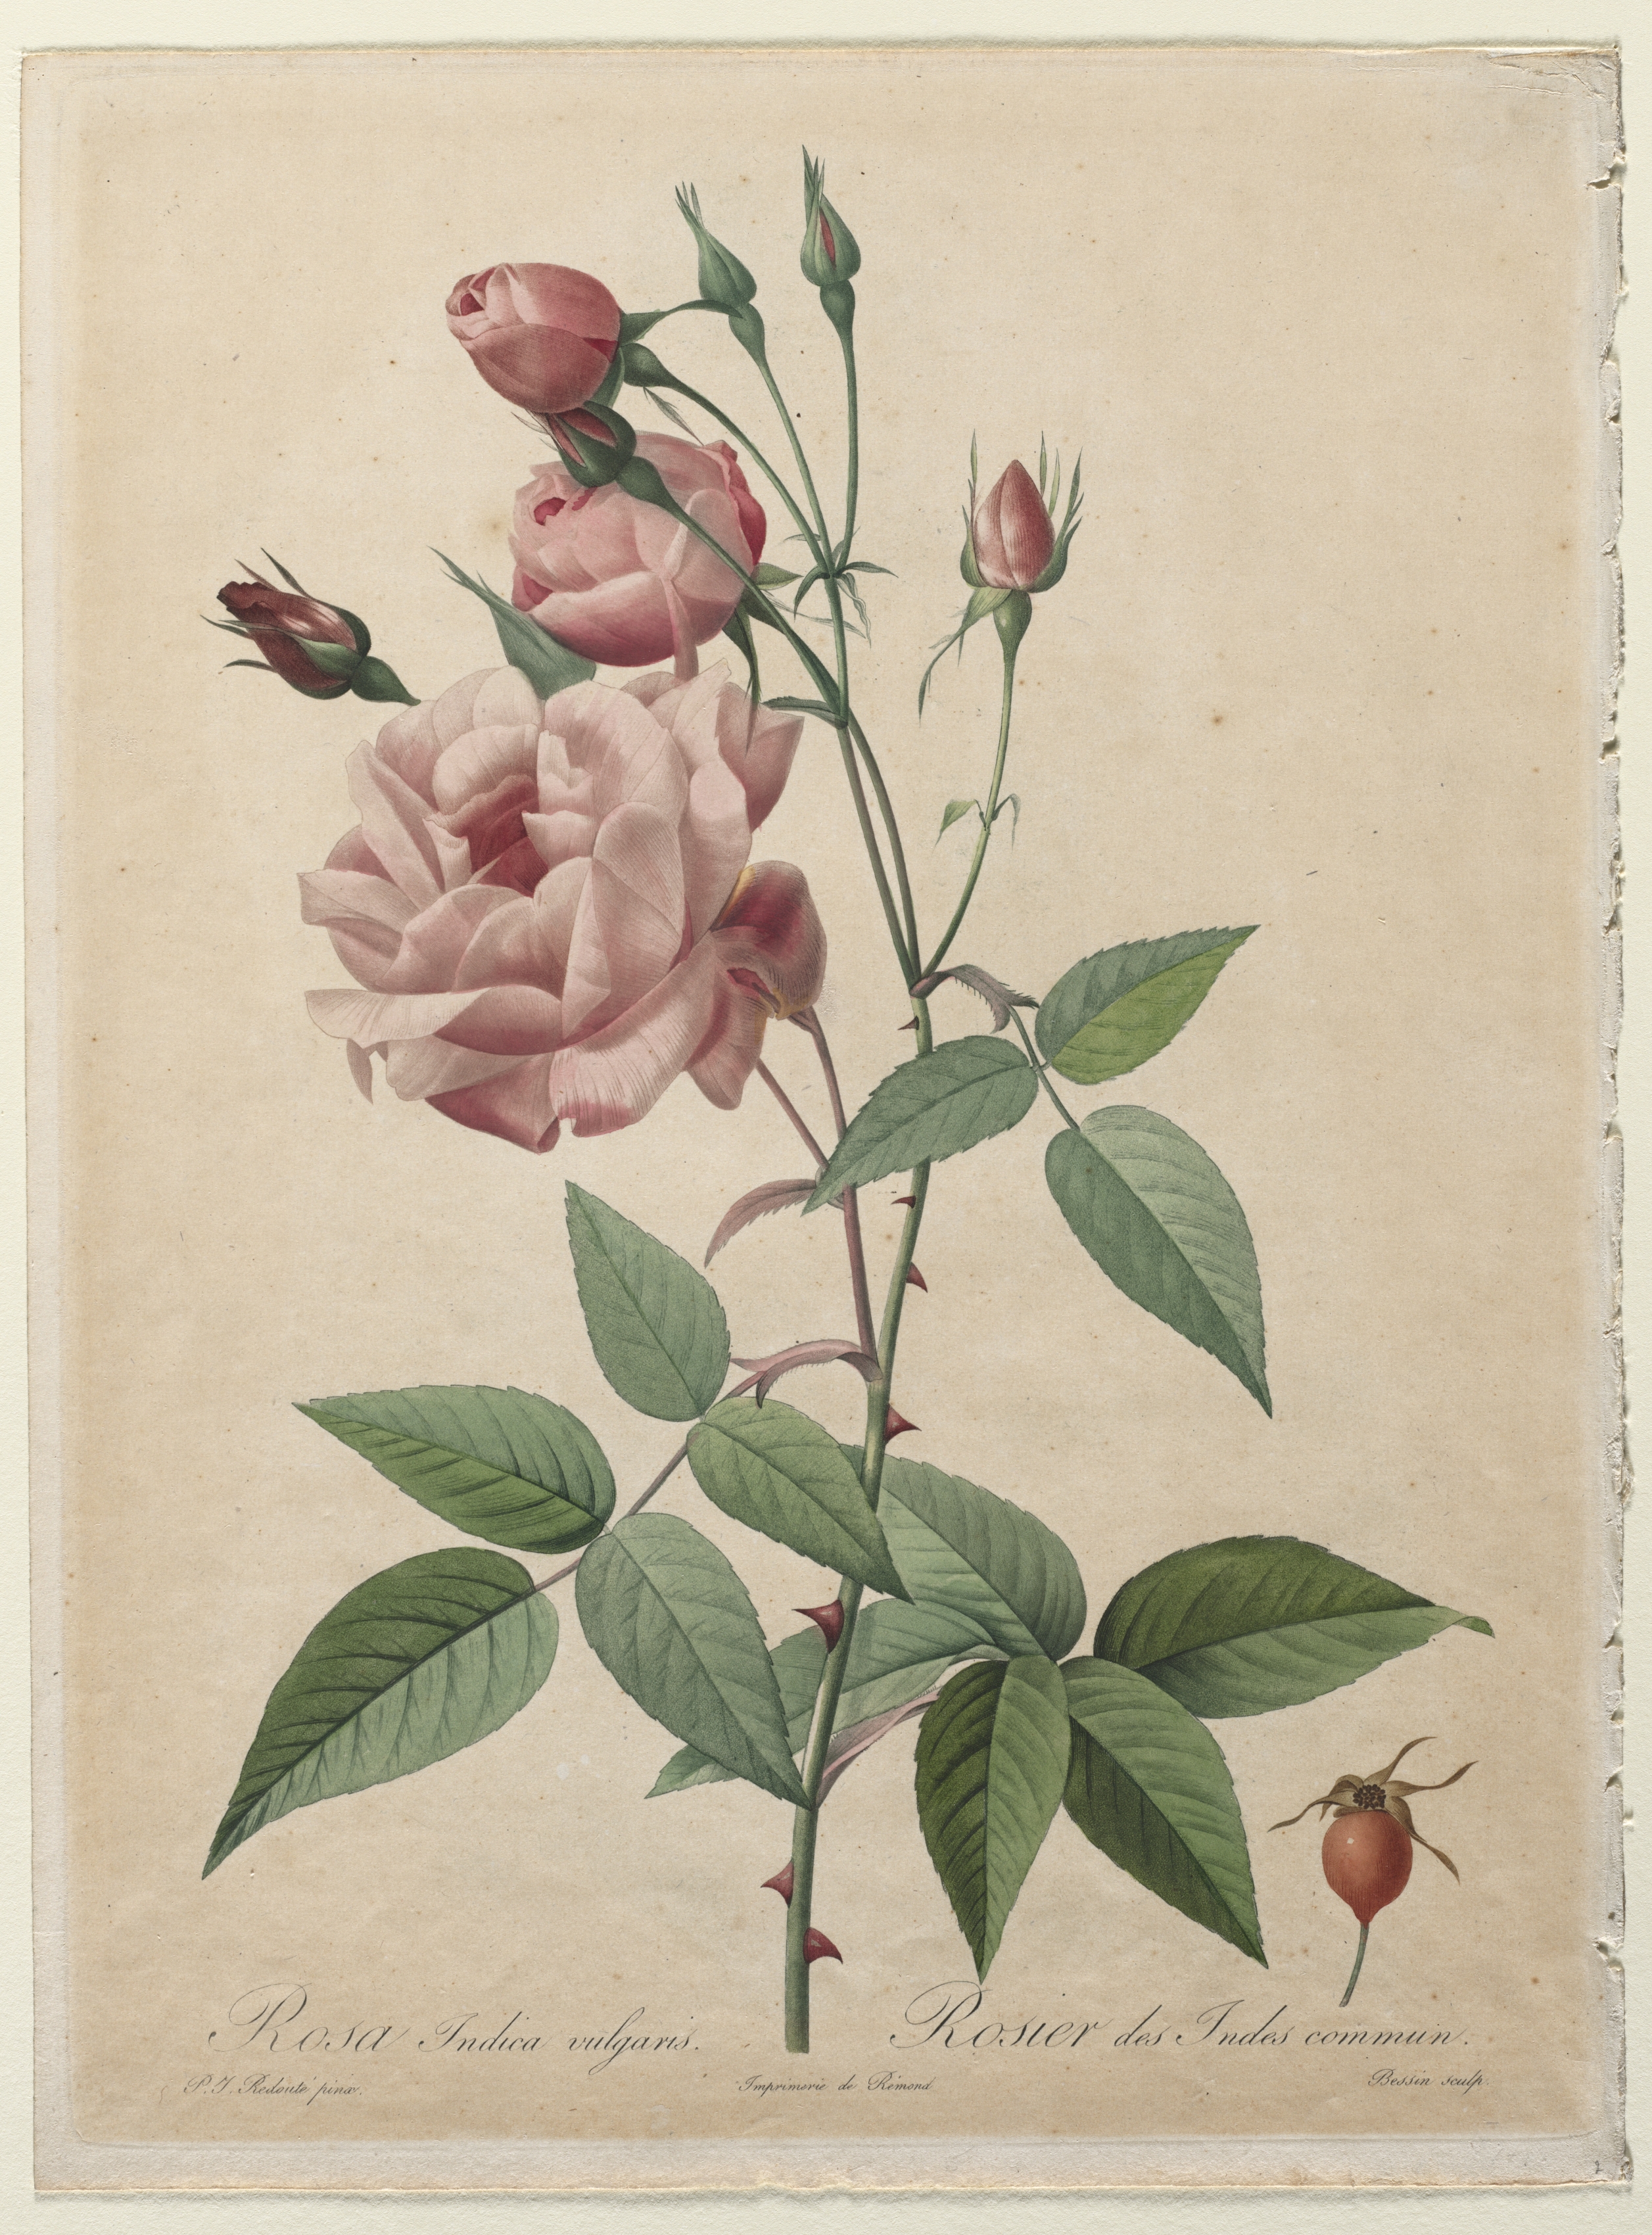 The Roses: China or Bengal Rose